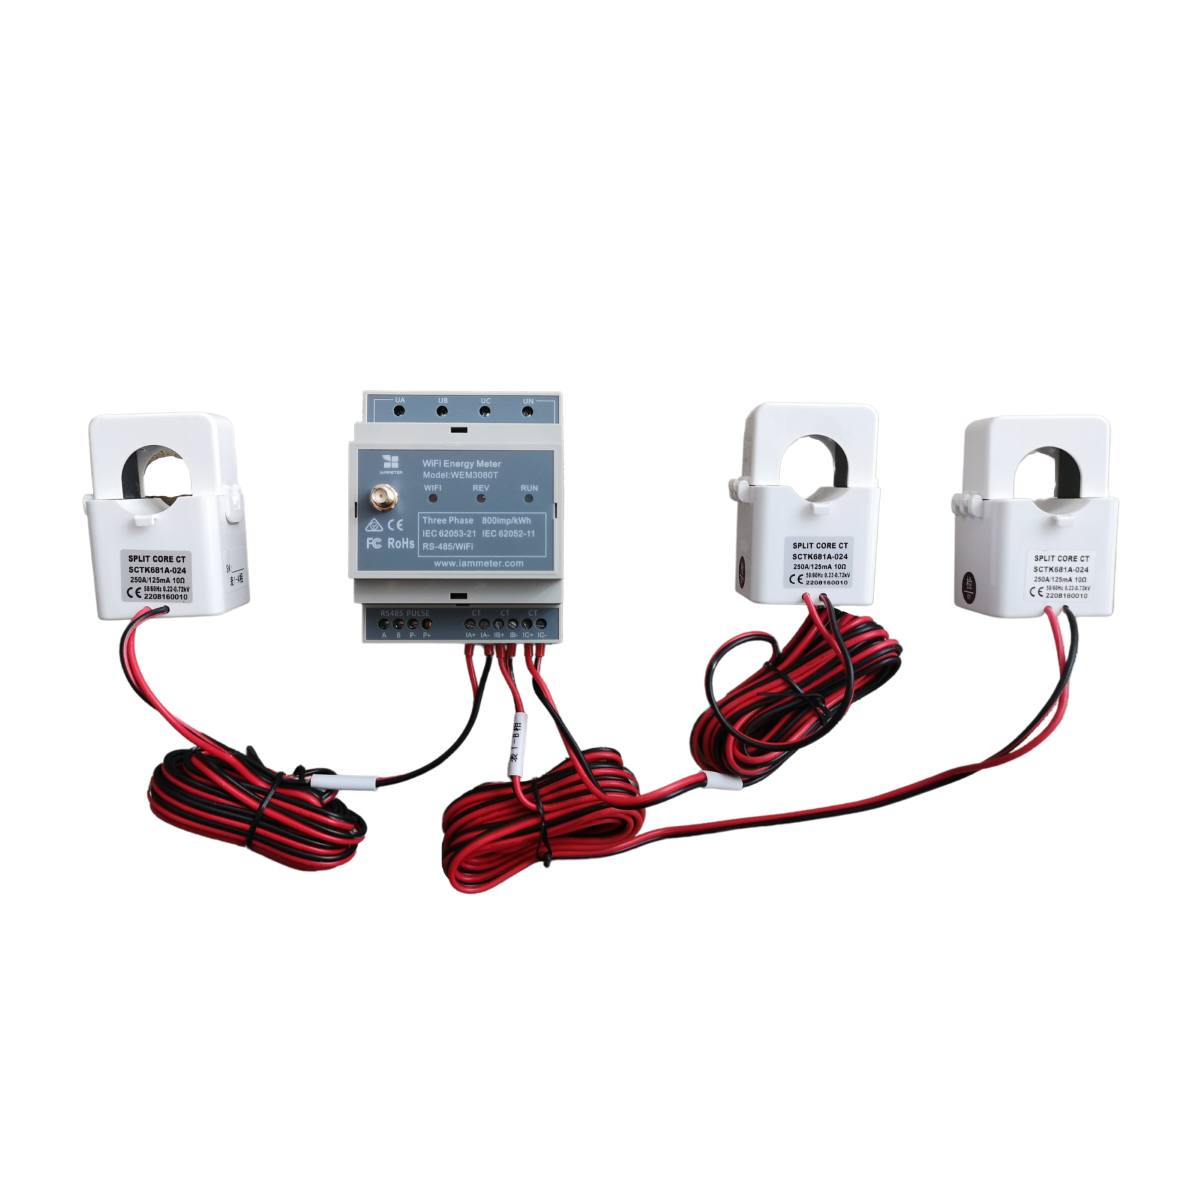 IAmMeter Bi-directional Three Phase WiFi Power Meter – 250A